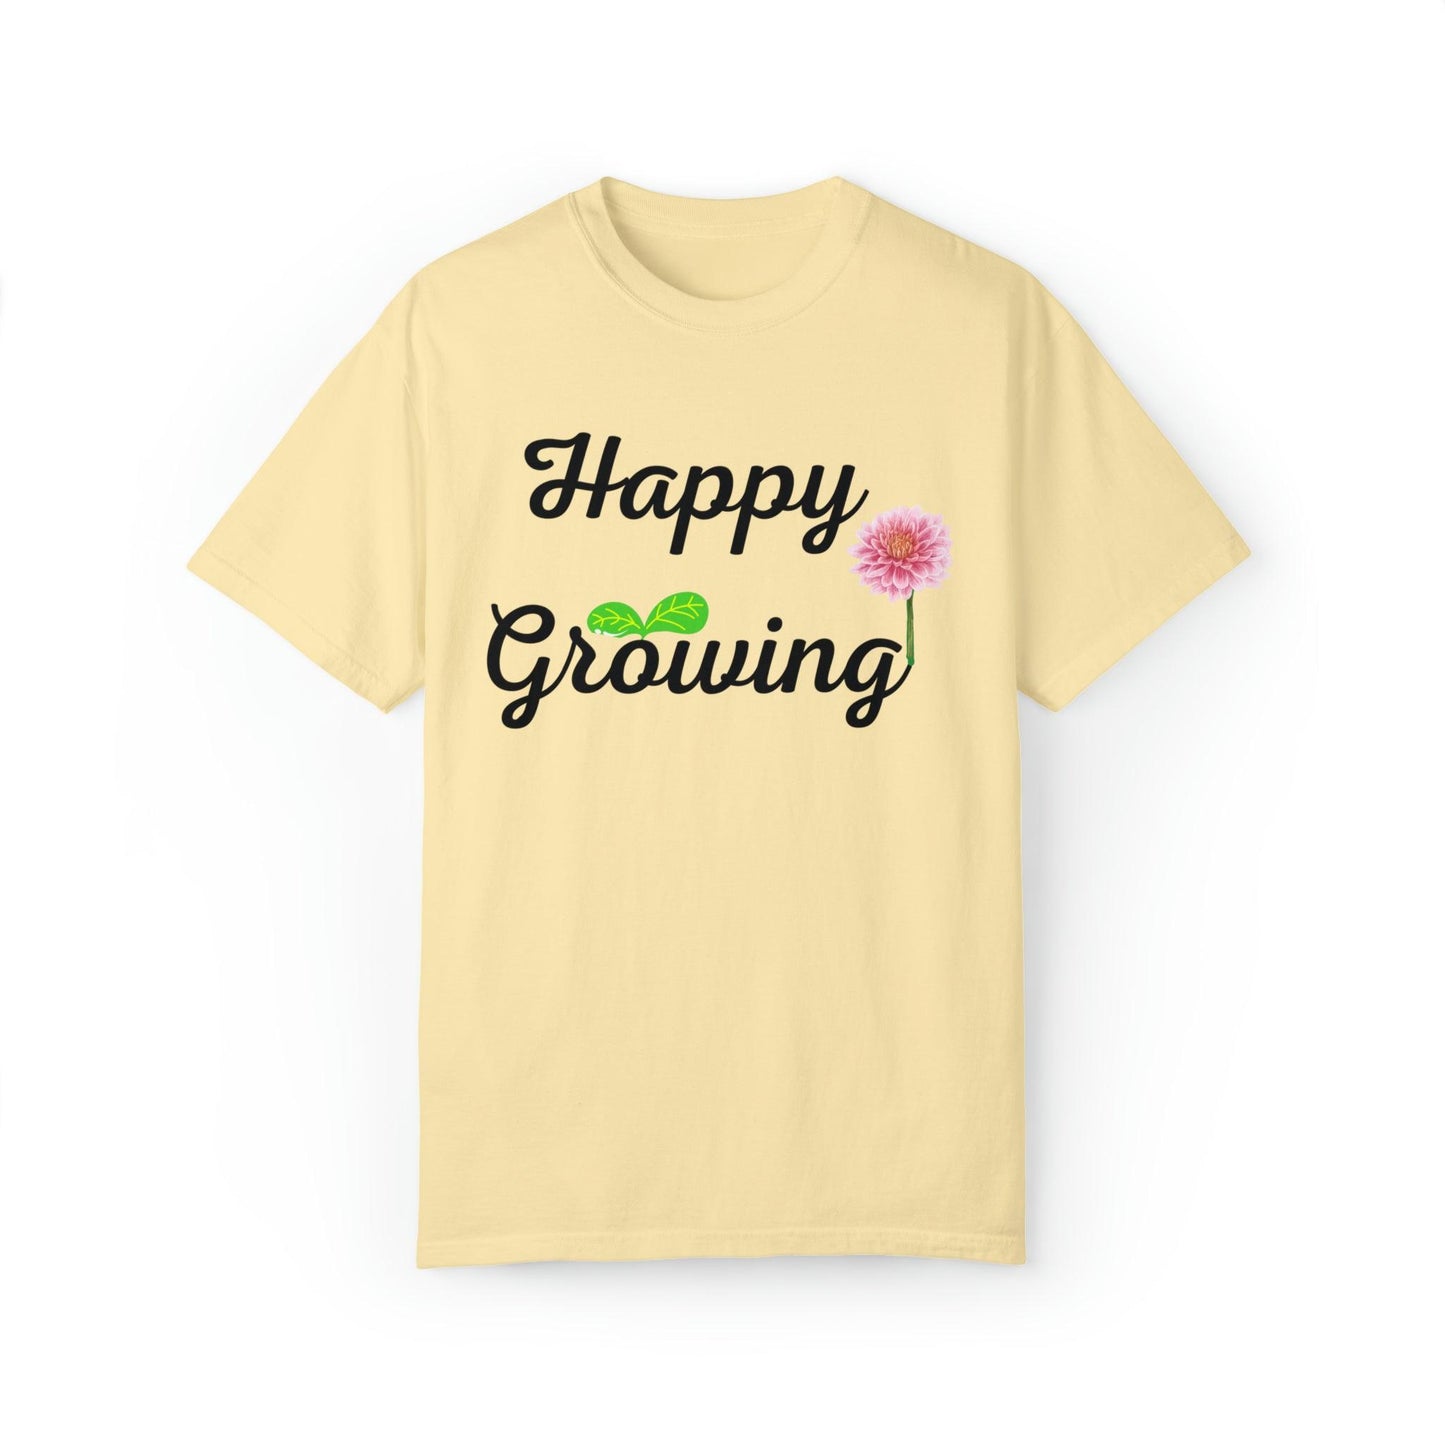 Farming shirt for farmers, Gift for her, Gardener gift for farm lover, Floral shirts for mom, Plant mom shirt, Gifts for mom, Garden gift for gardeners, Nature shirt for gardeners